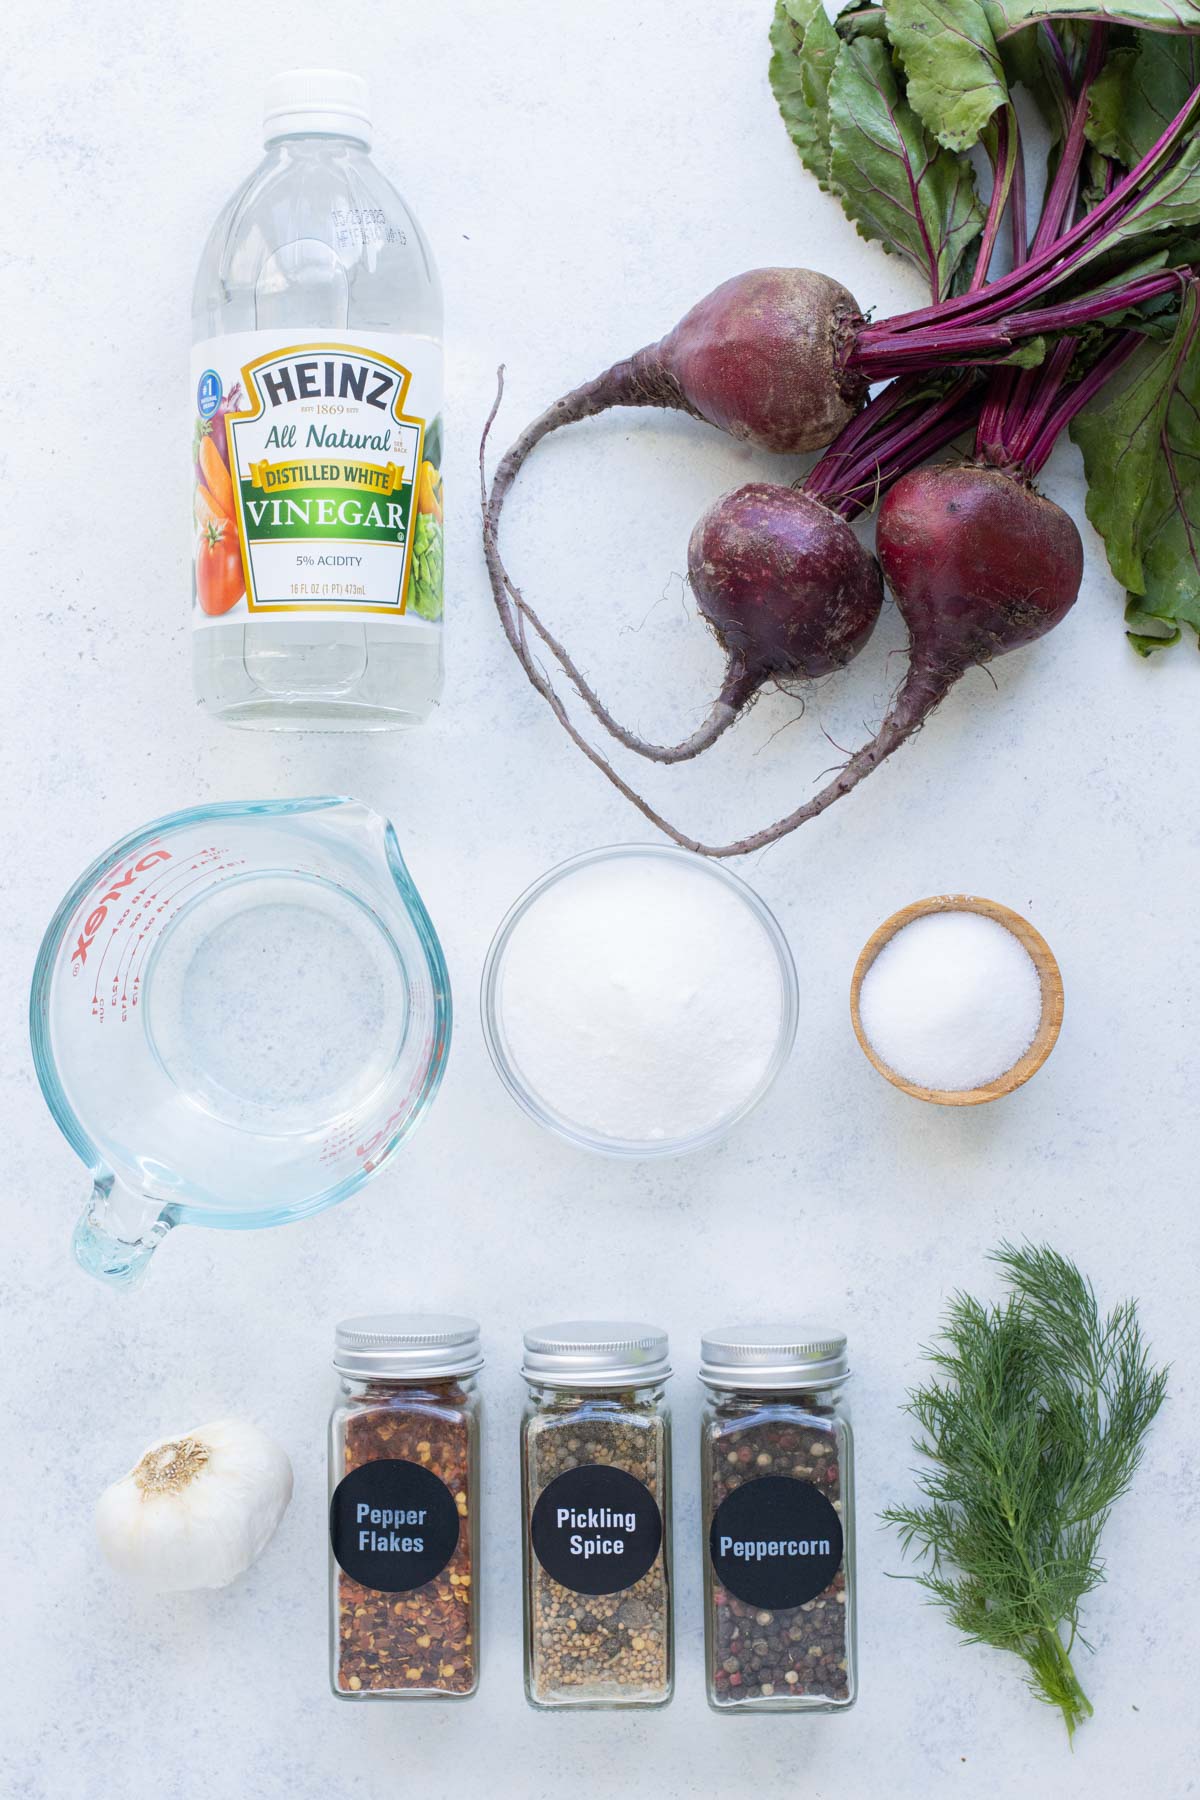 Beets, vinegar, water, salt, sugar, and seasonings are the ingredients for pickled beets.